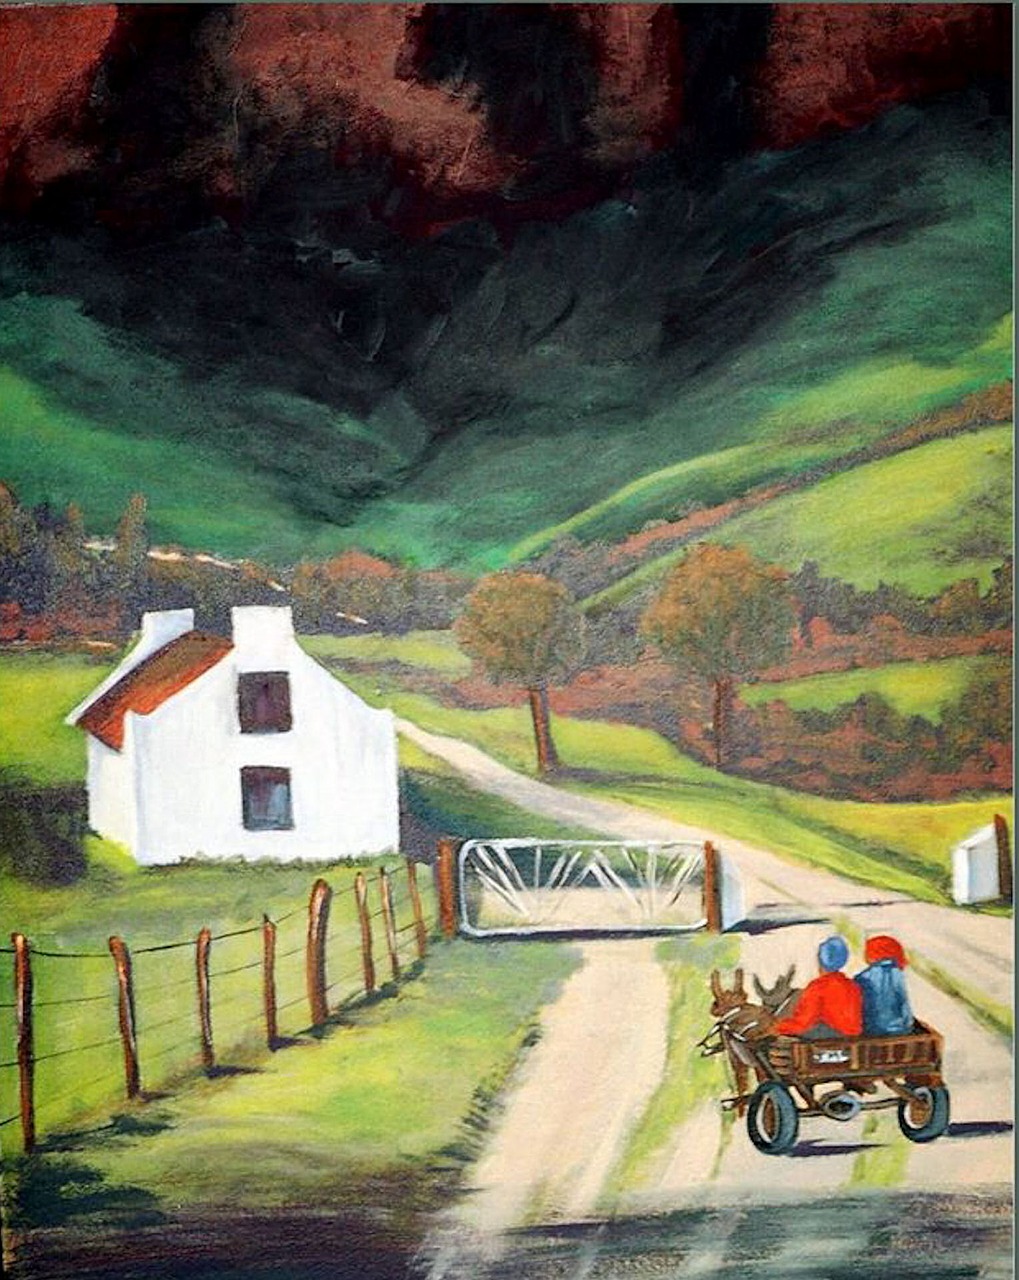 painted landscape country donkey cart free photo